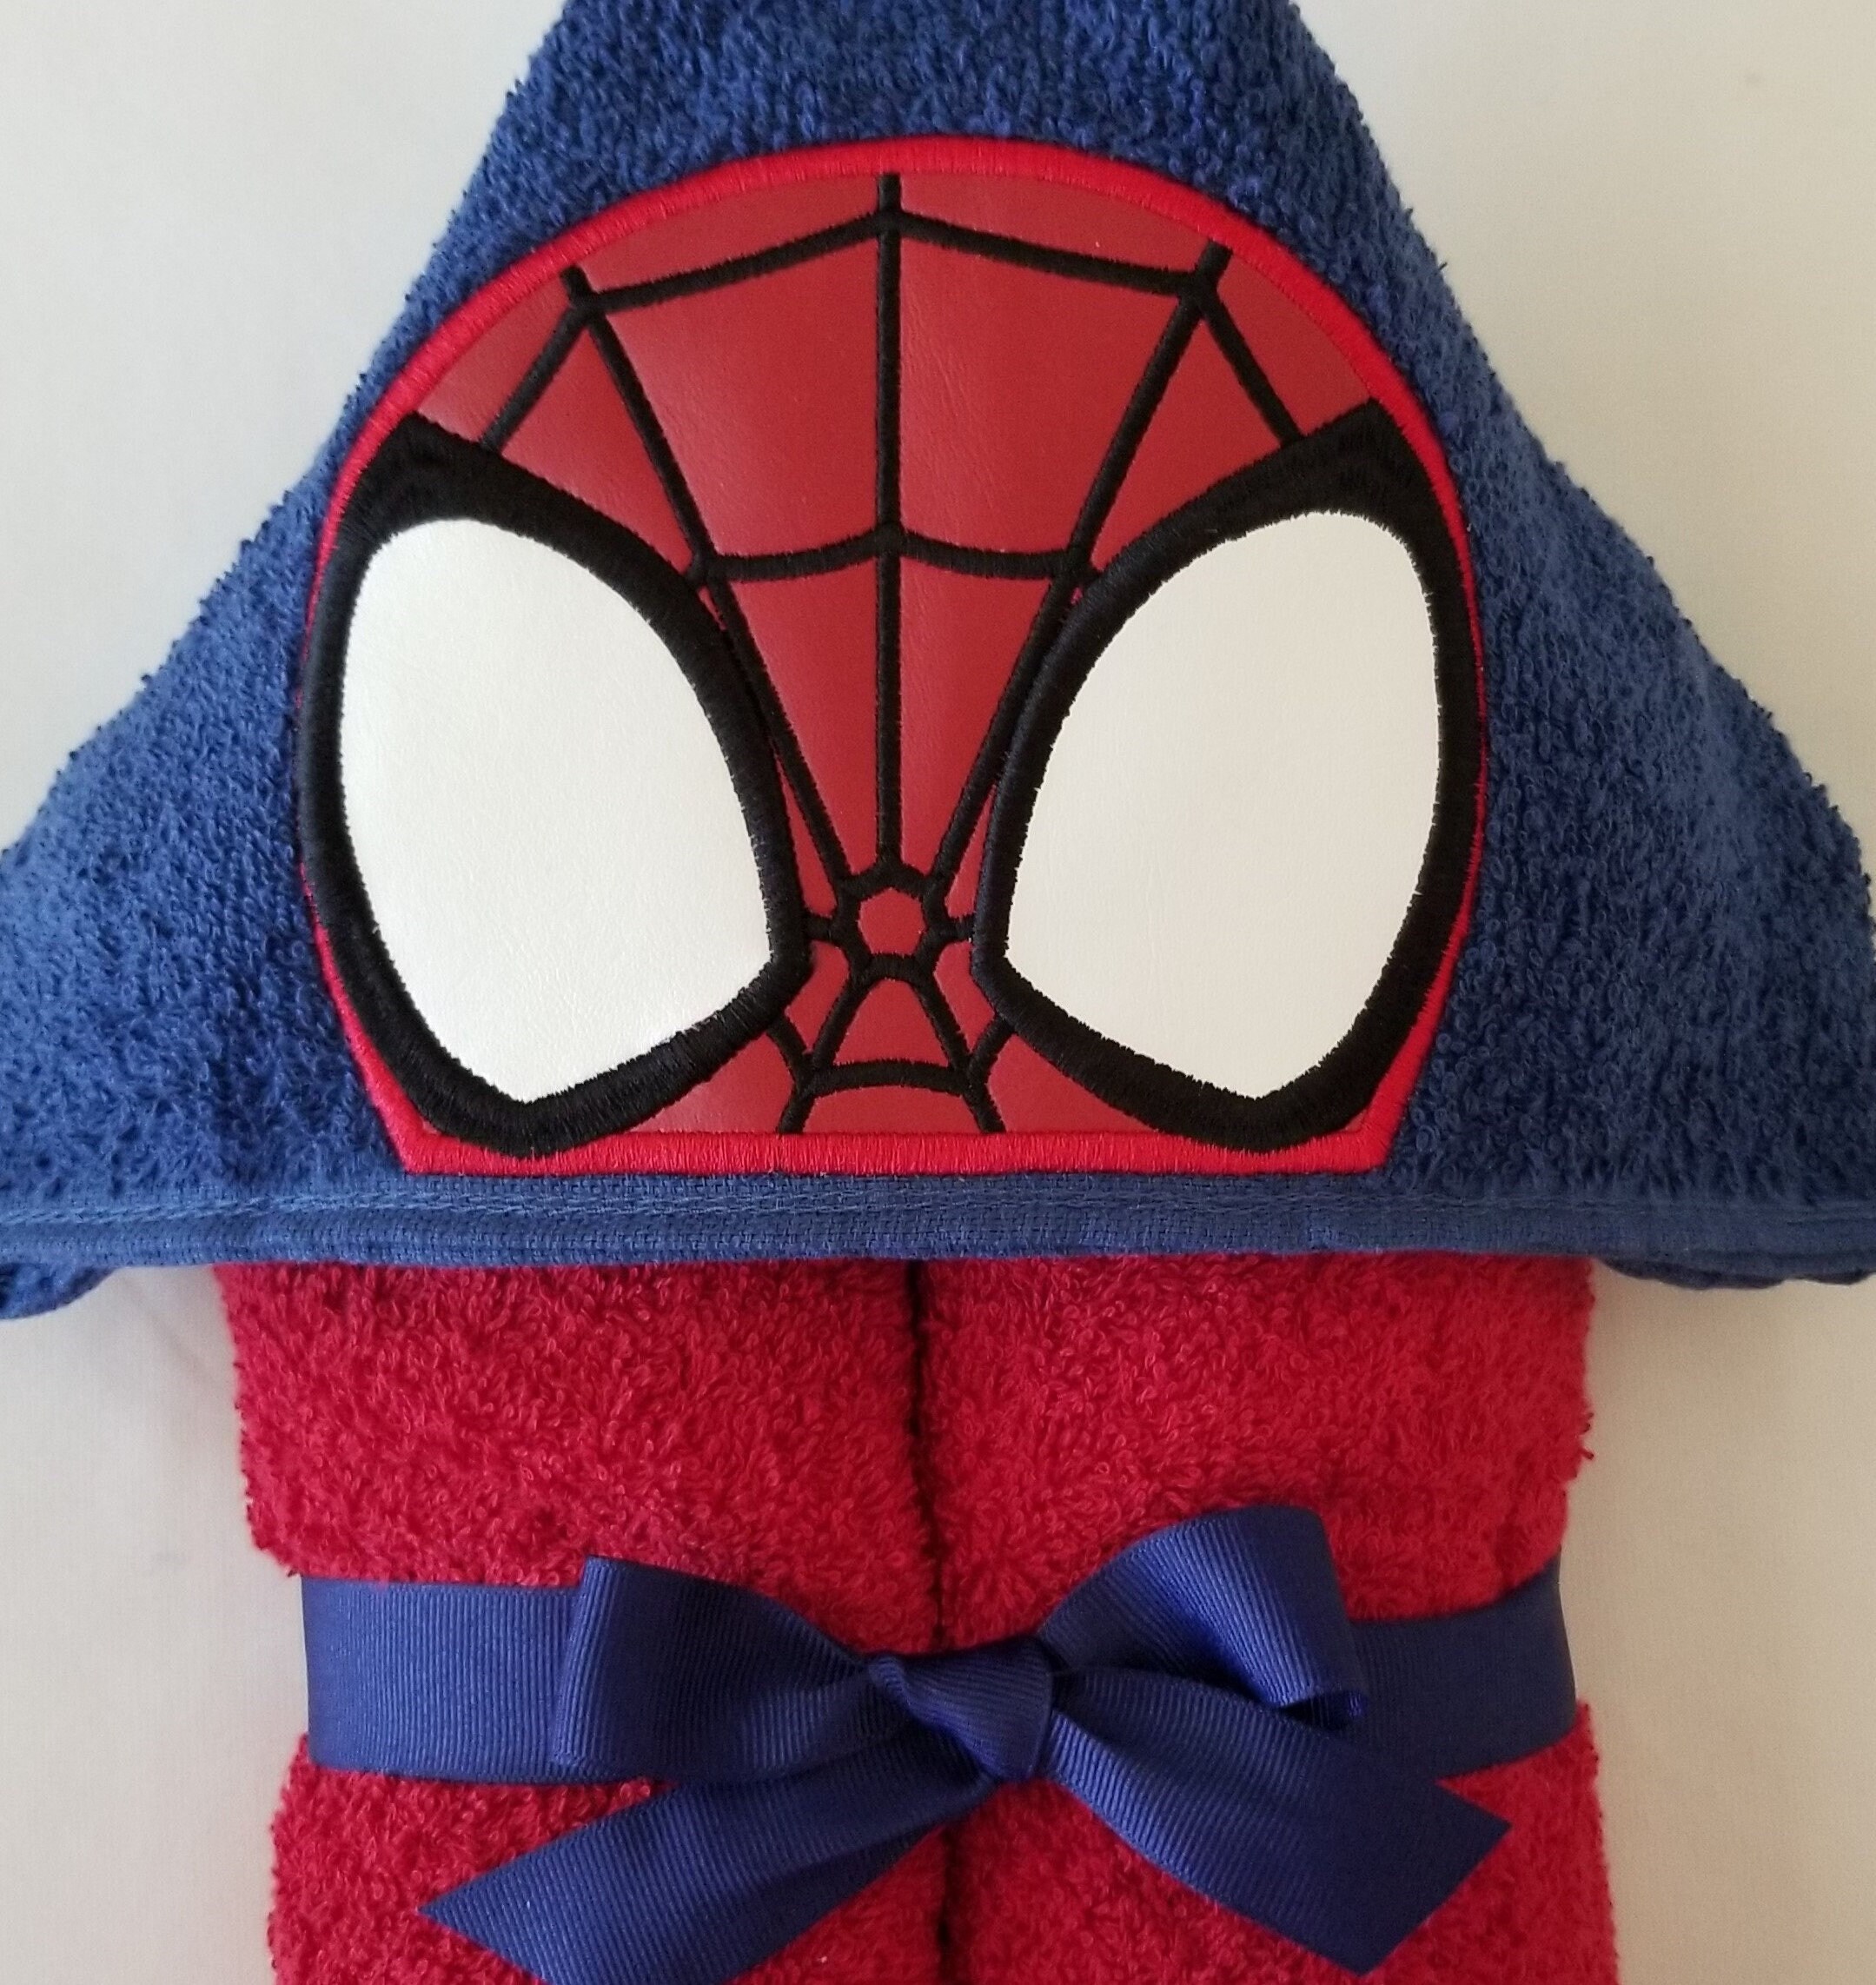 Bonnet Spider-Man Marvel bonnet de ski Spiderman Xmas Laplander